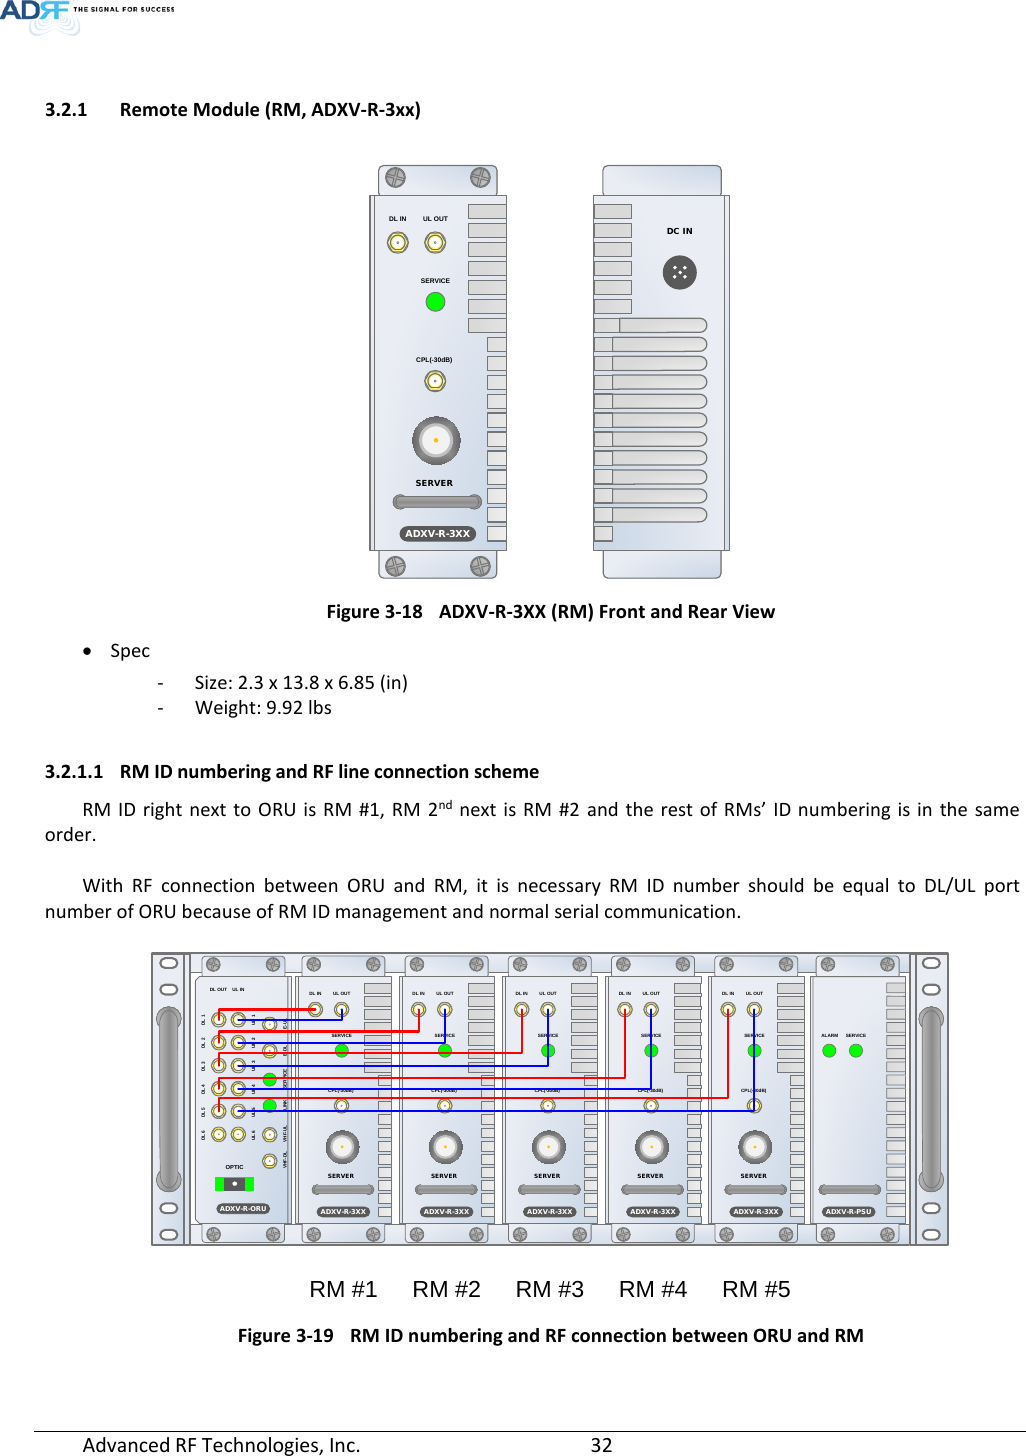 Page 32 of ADRF KOREA ADXV-R-336 DAS (Distributed Antenna System) User Manual ADXV DAS